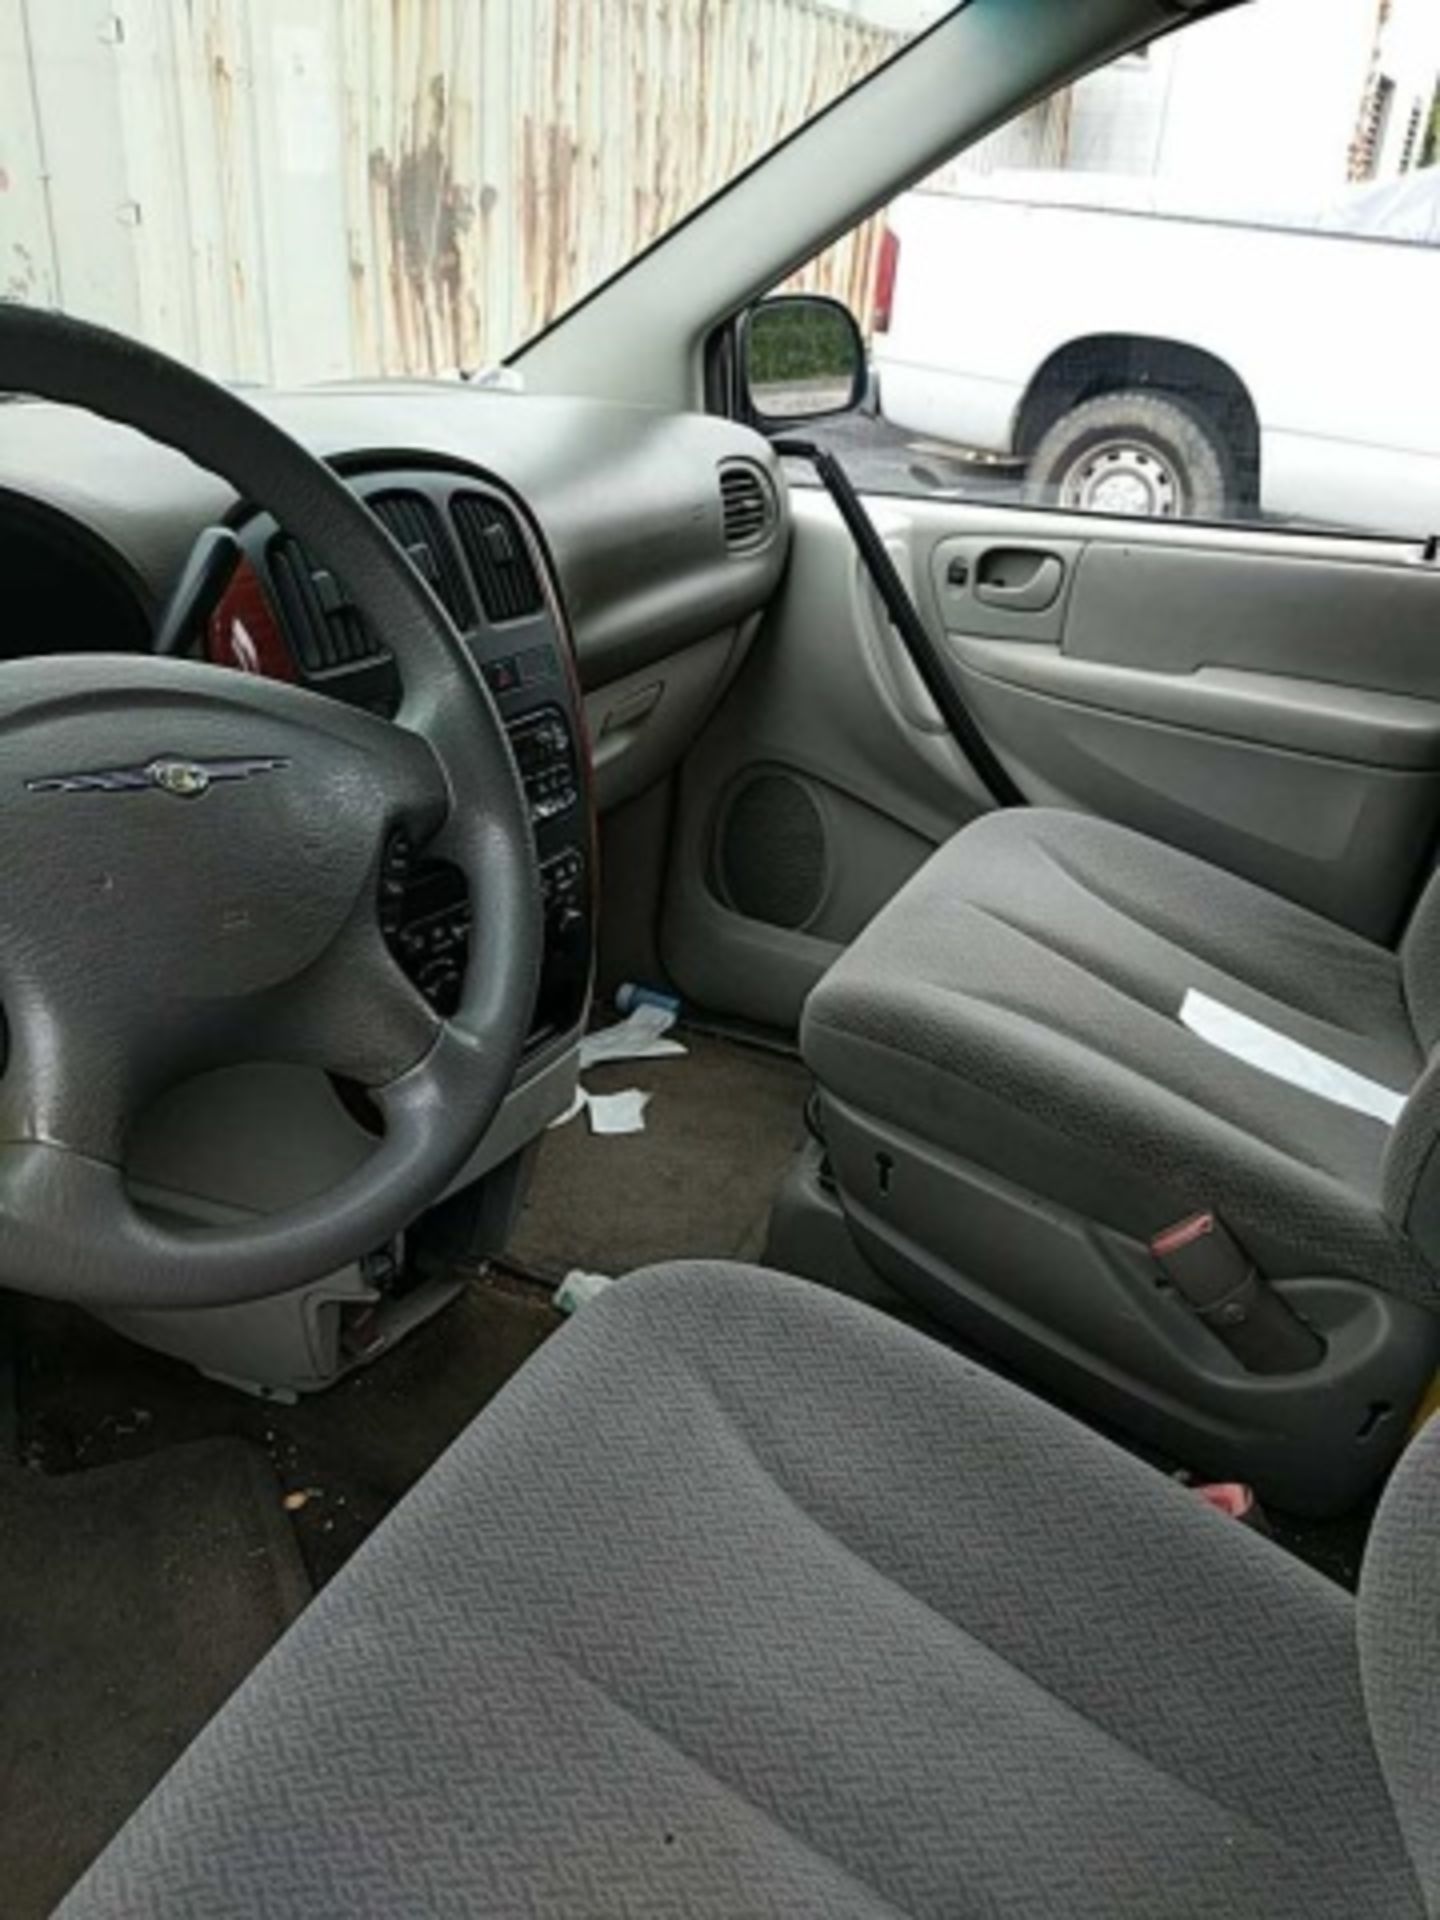 2006 Chrysler Town & Country Minivan - Image 9 of 12